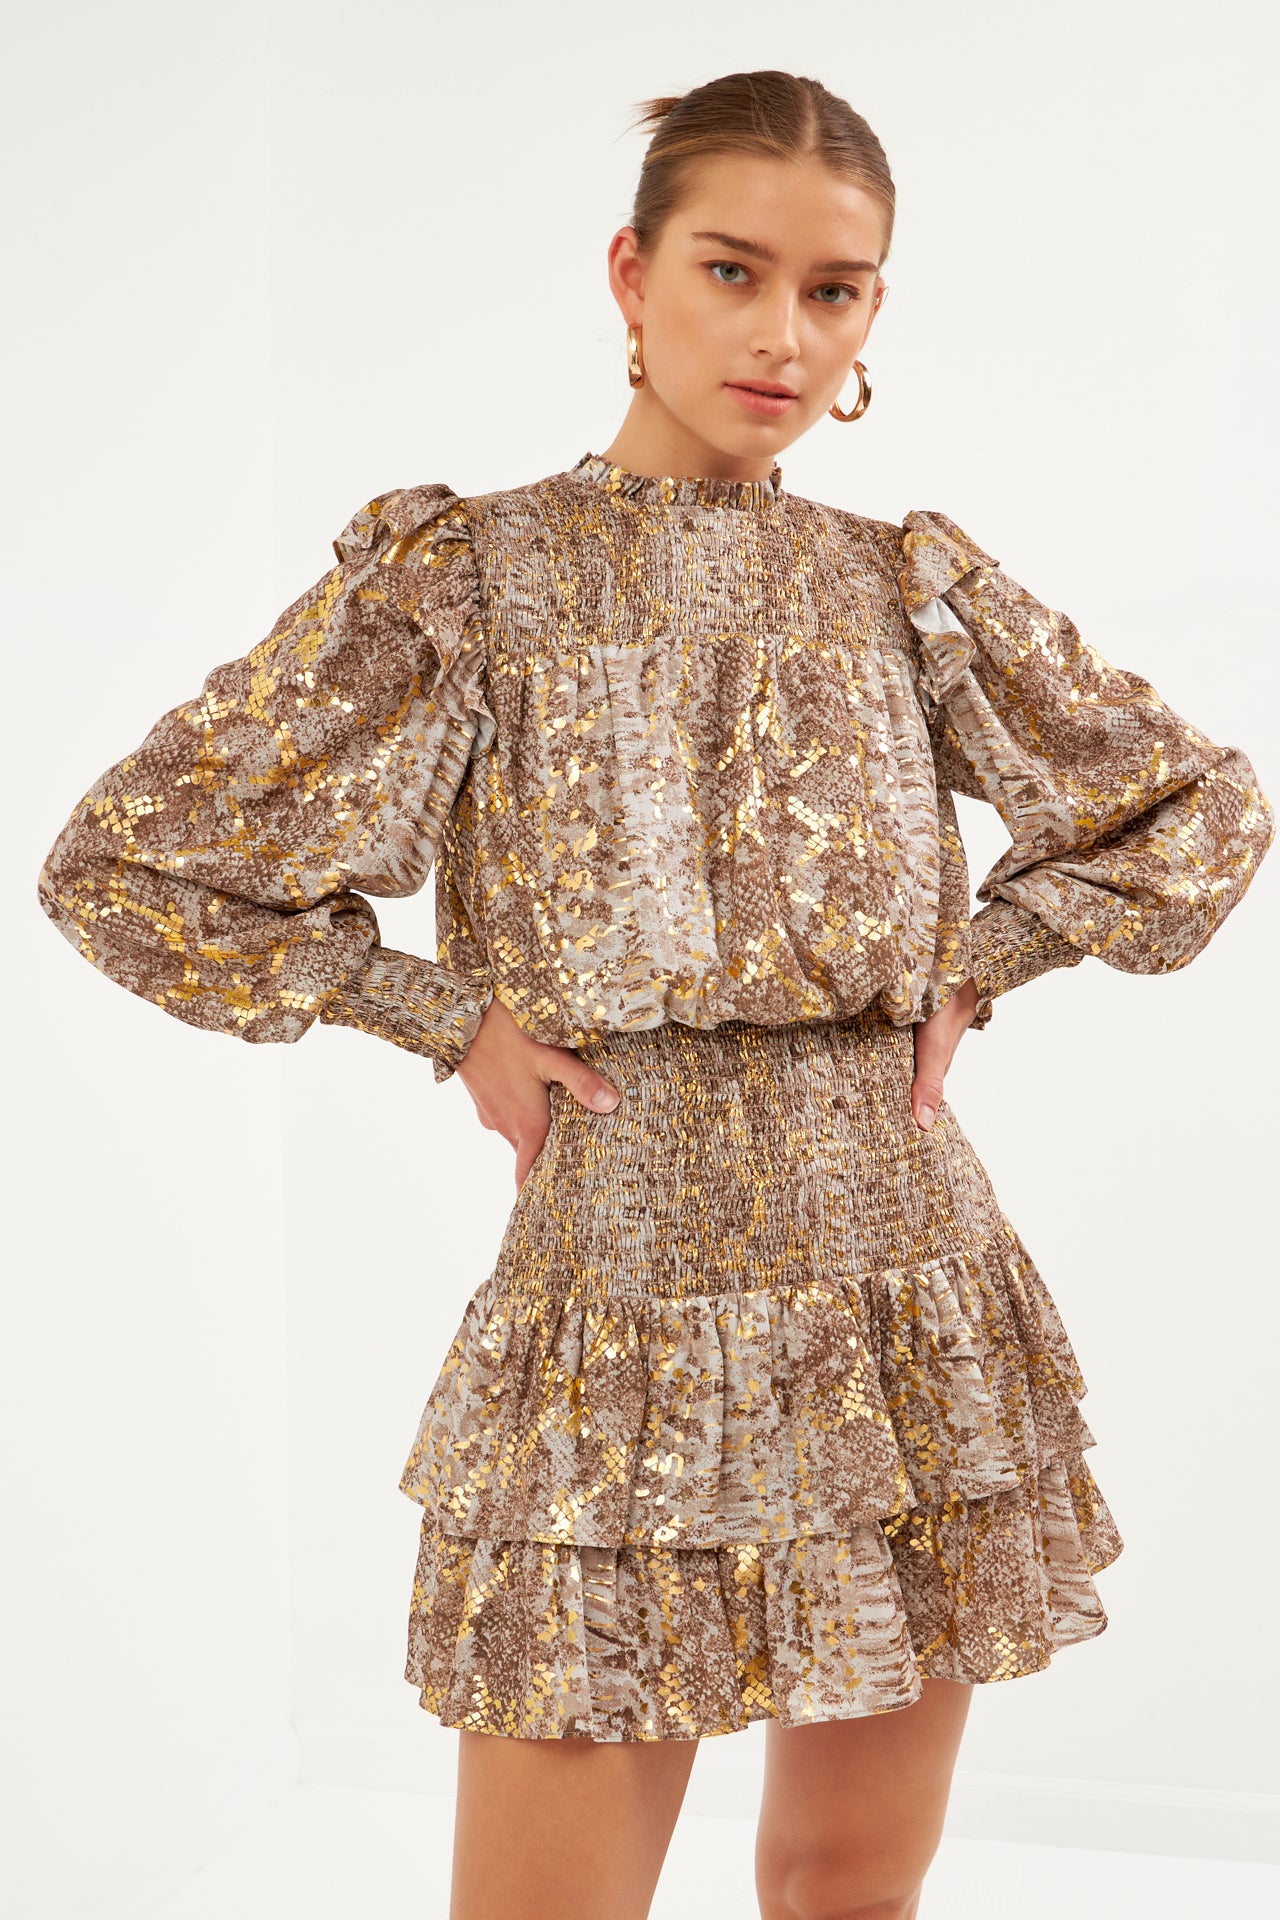 ENDLESS ROSE - Metallic Animal Print Mini Dress - DRESSES available at Objectrare